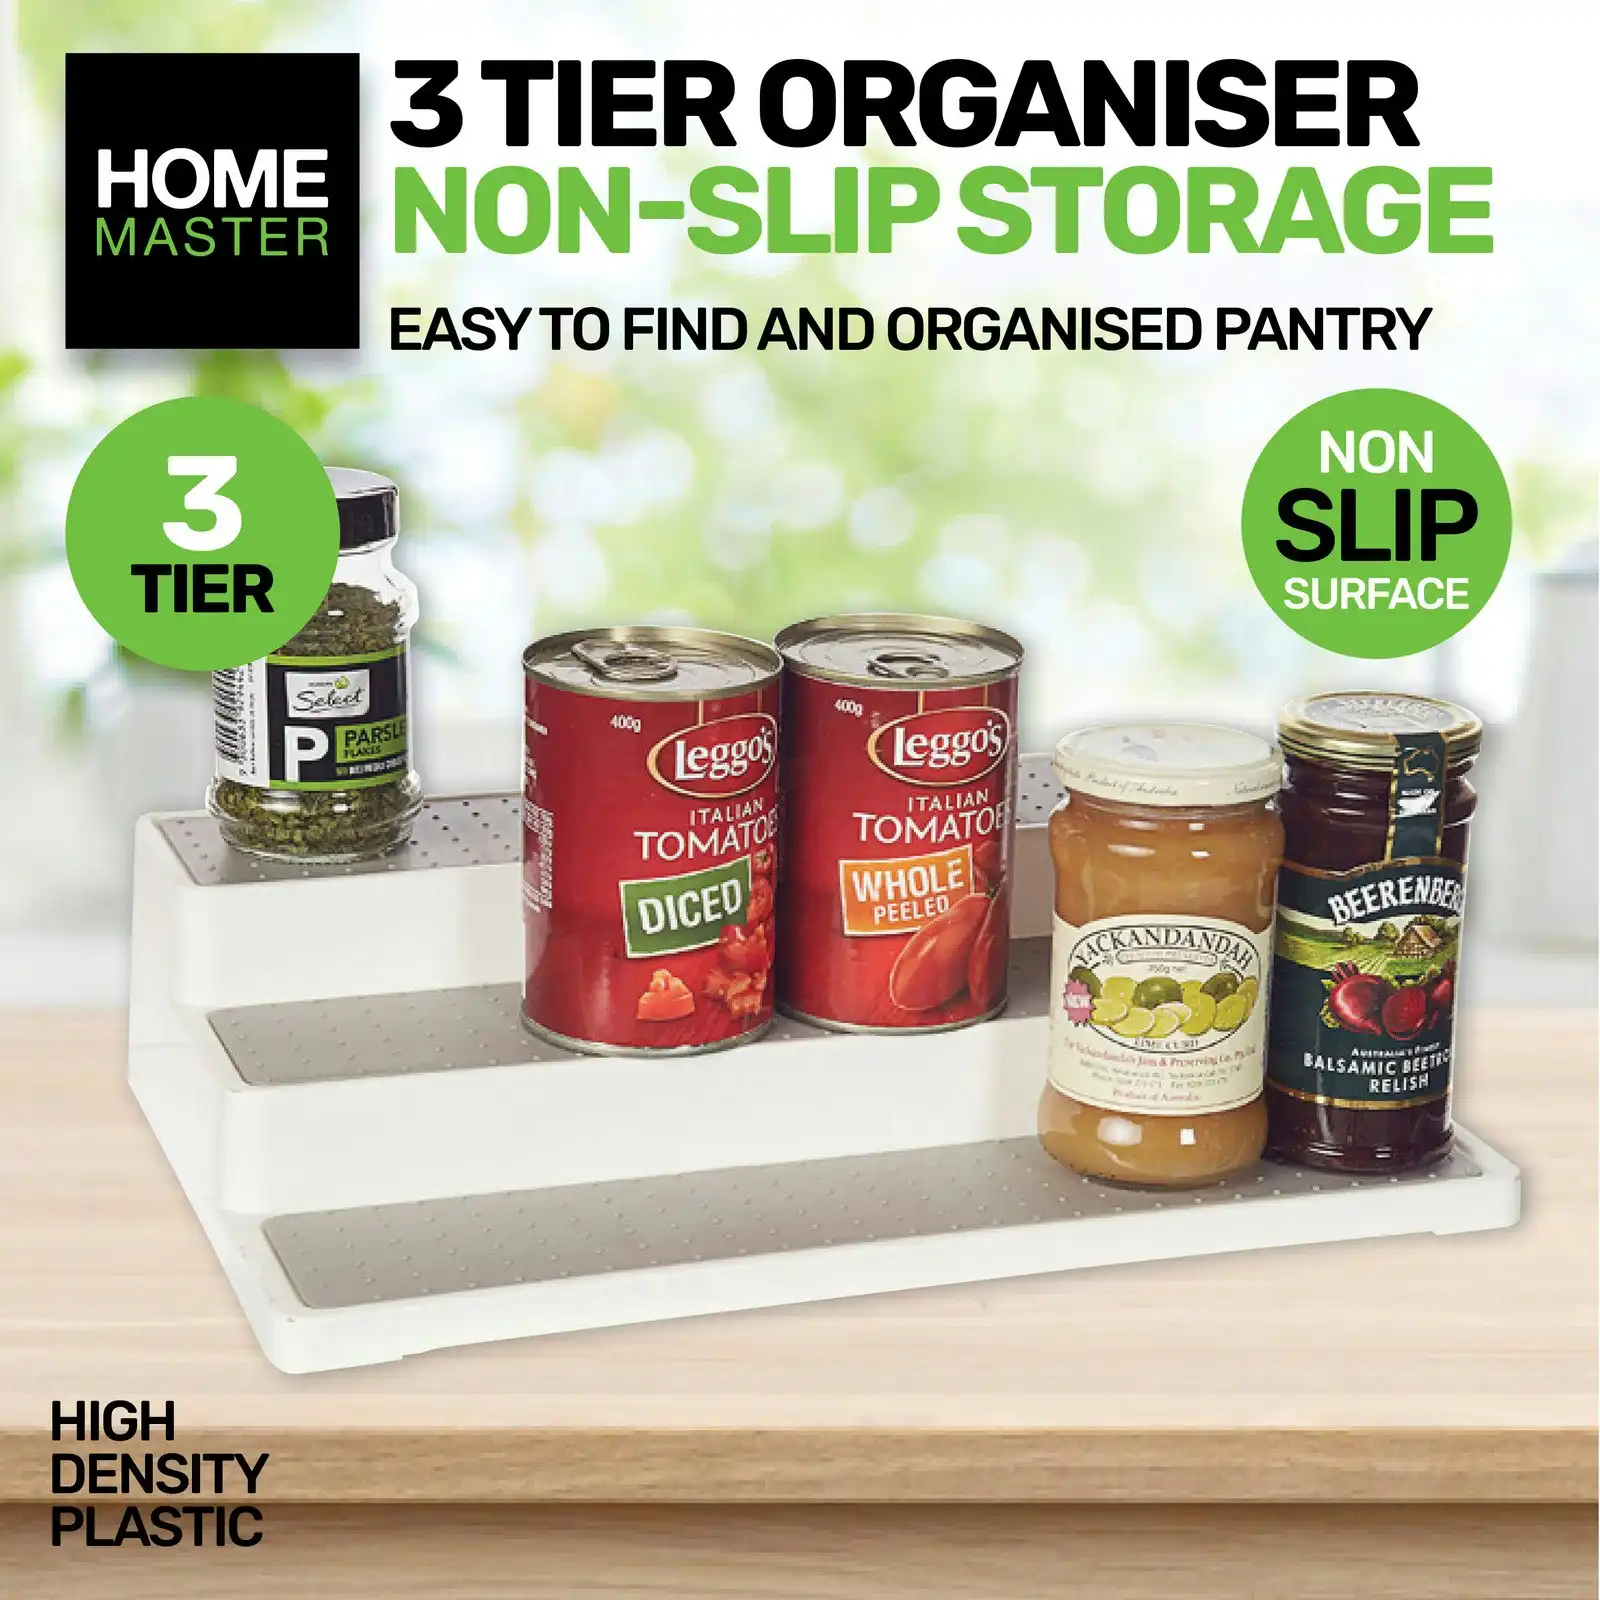 Home Master Organiser 3 Tier Non-Slip Storage Kitchen Pantry Tabletops 36cm